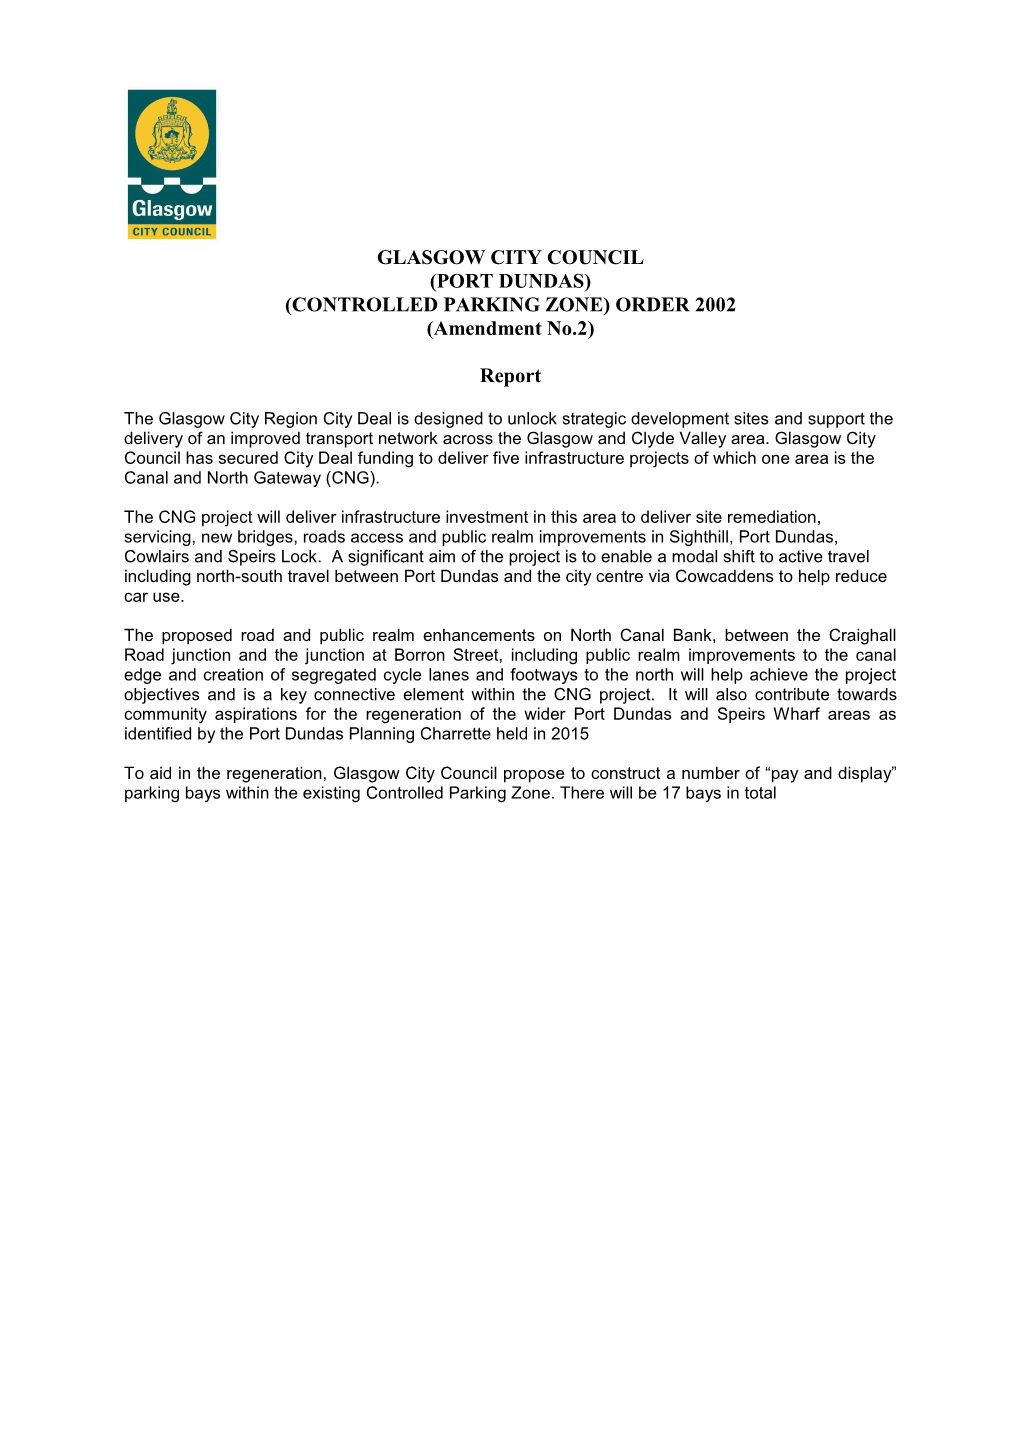 GLASGOW CITY COUNCIL (PORT DUNDAS) (CONTROLLED PARKING ZONE) ORDER 2002 (Amendment No.2)